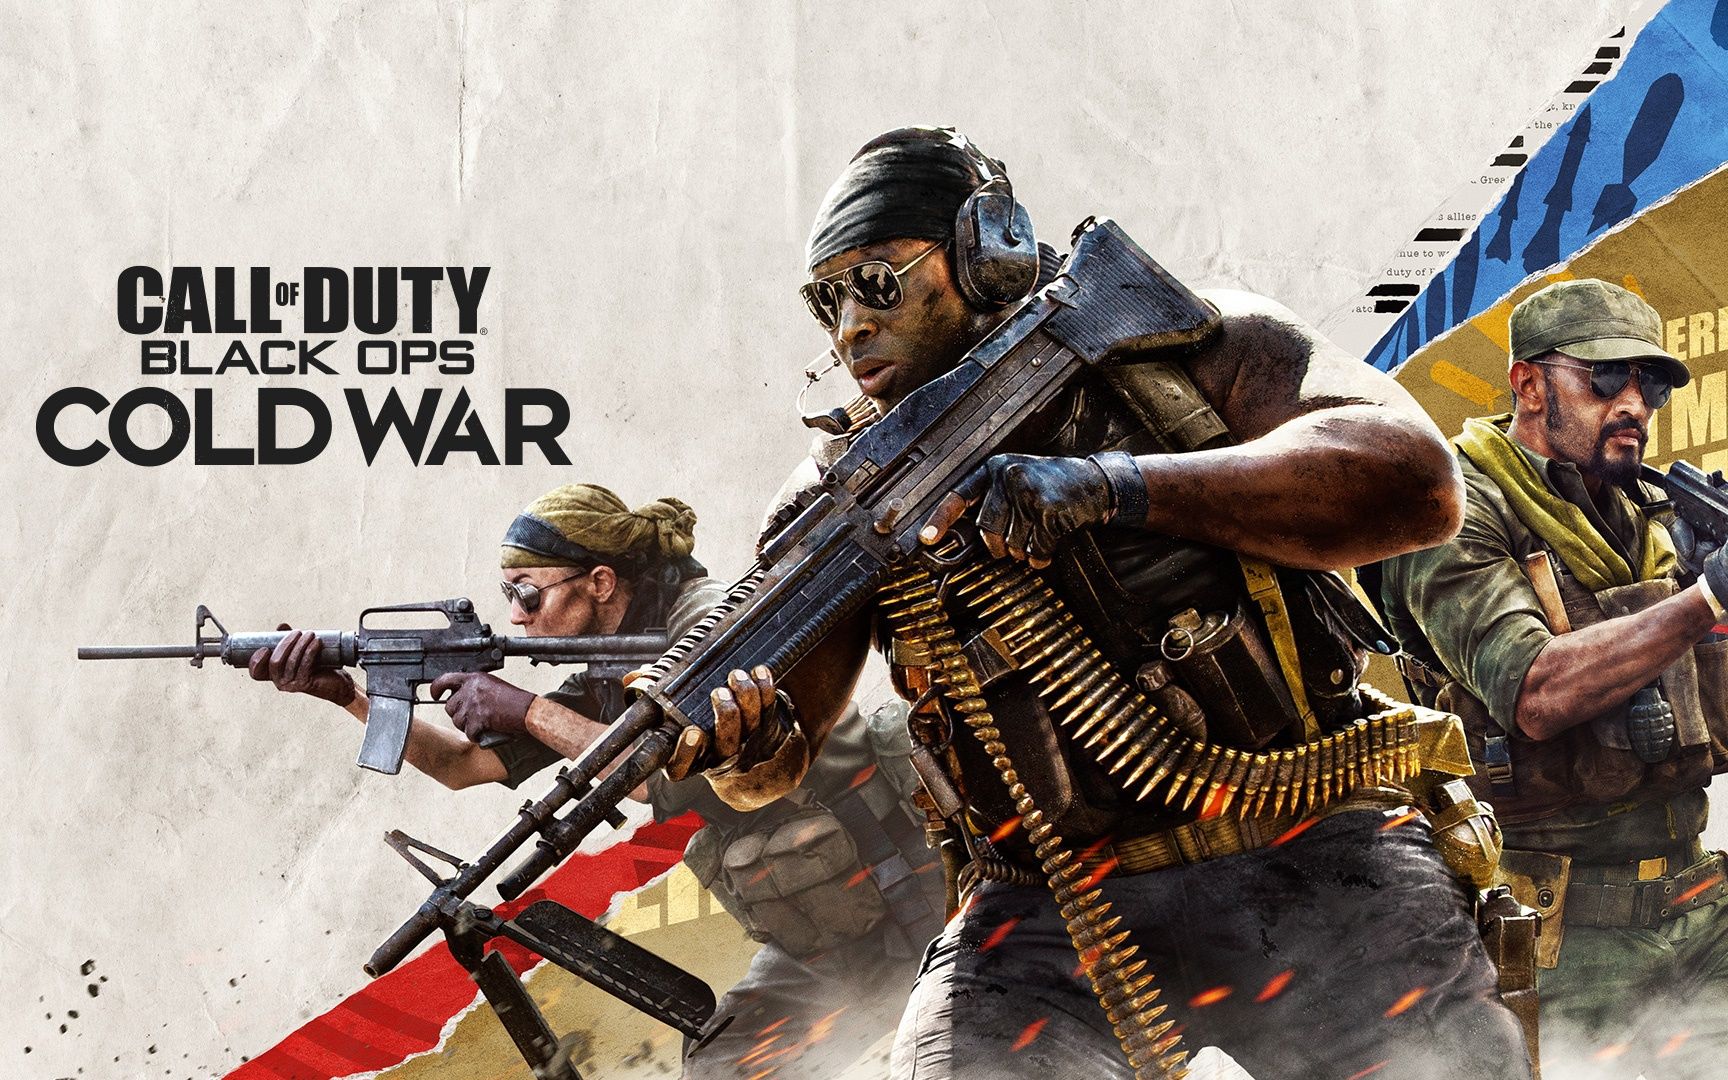 使命召唤17 黑色行动之冷战 Call of Duty: Black Ops Cold War v1.34.0.15931218 中文网盘下载-二次元共享站2cyshare